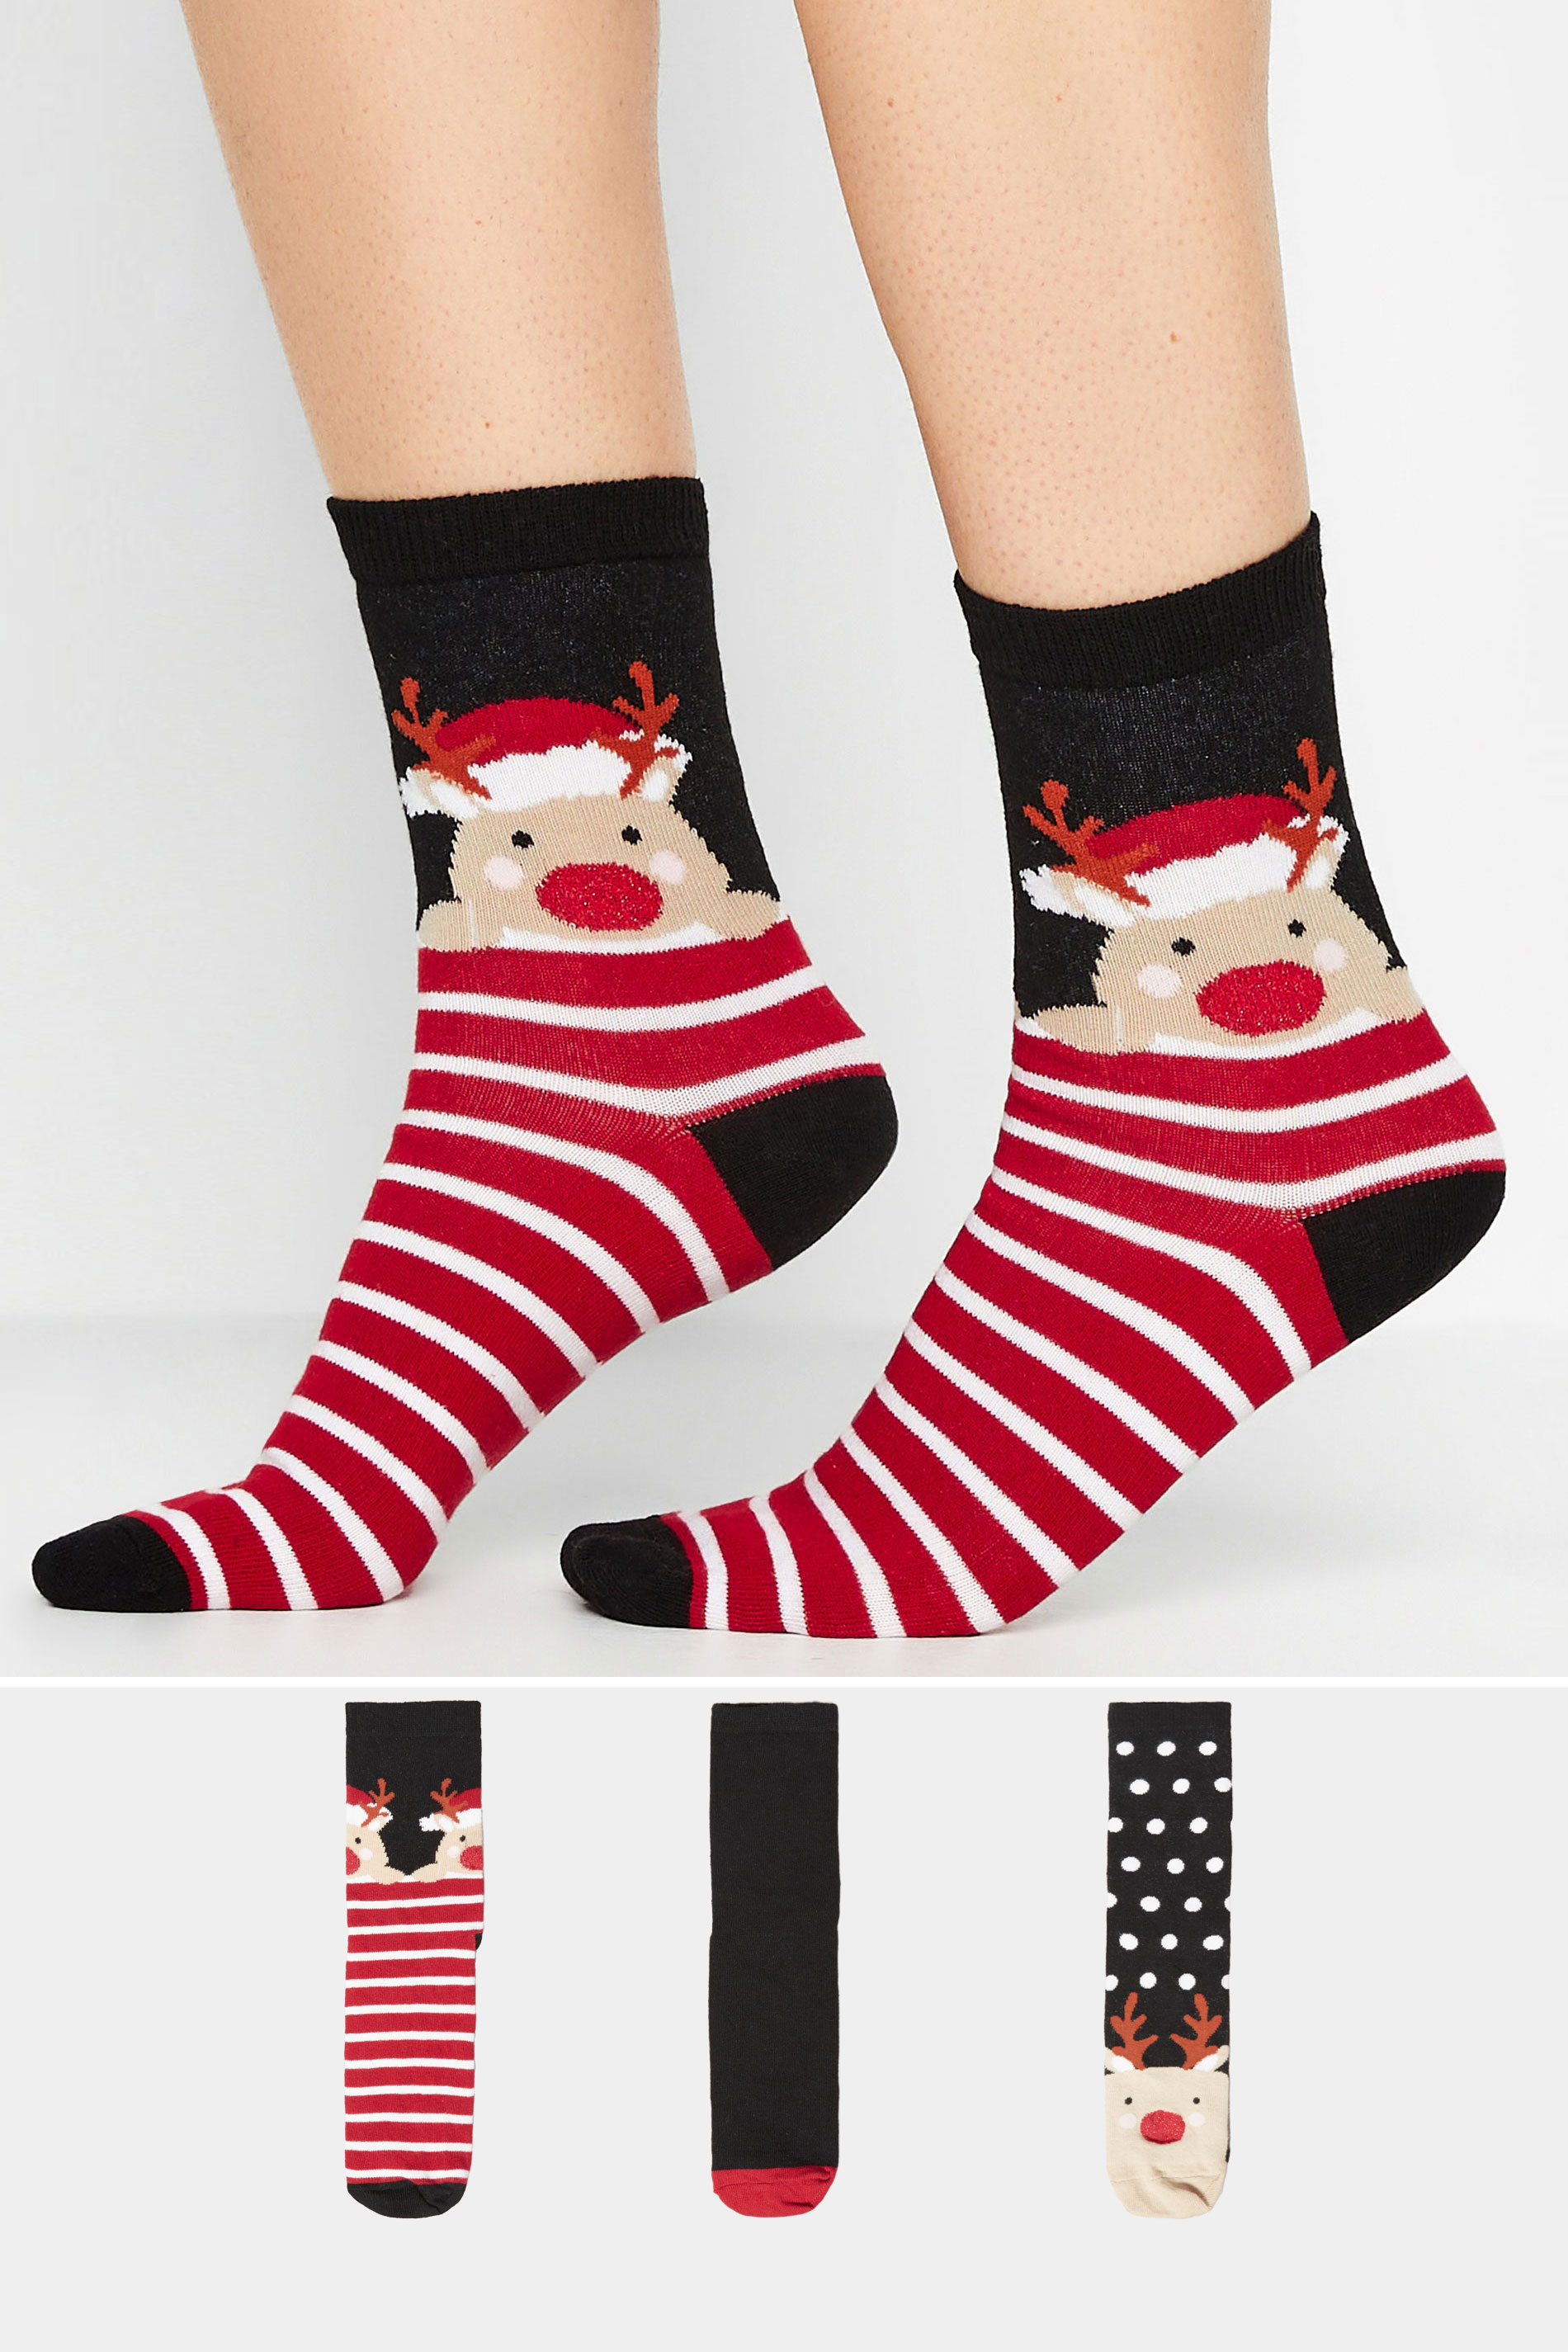 LTS 3 PACK Black Novelty Reindeer Ankle Socks | Long Tall Sally 1